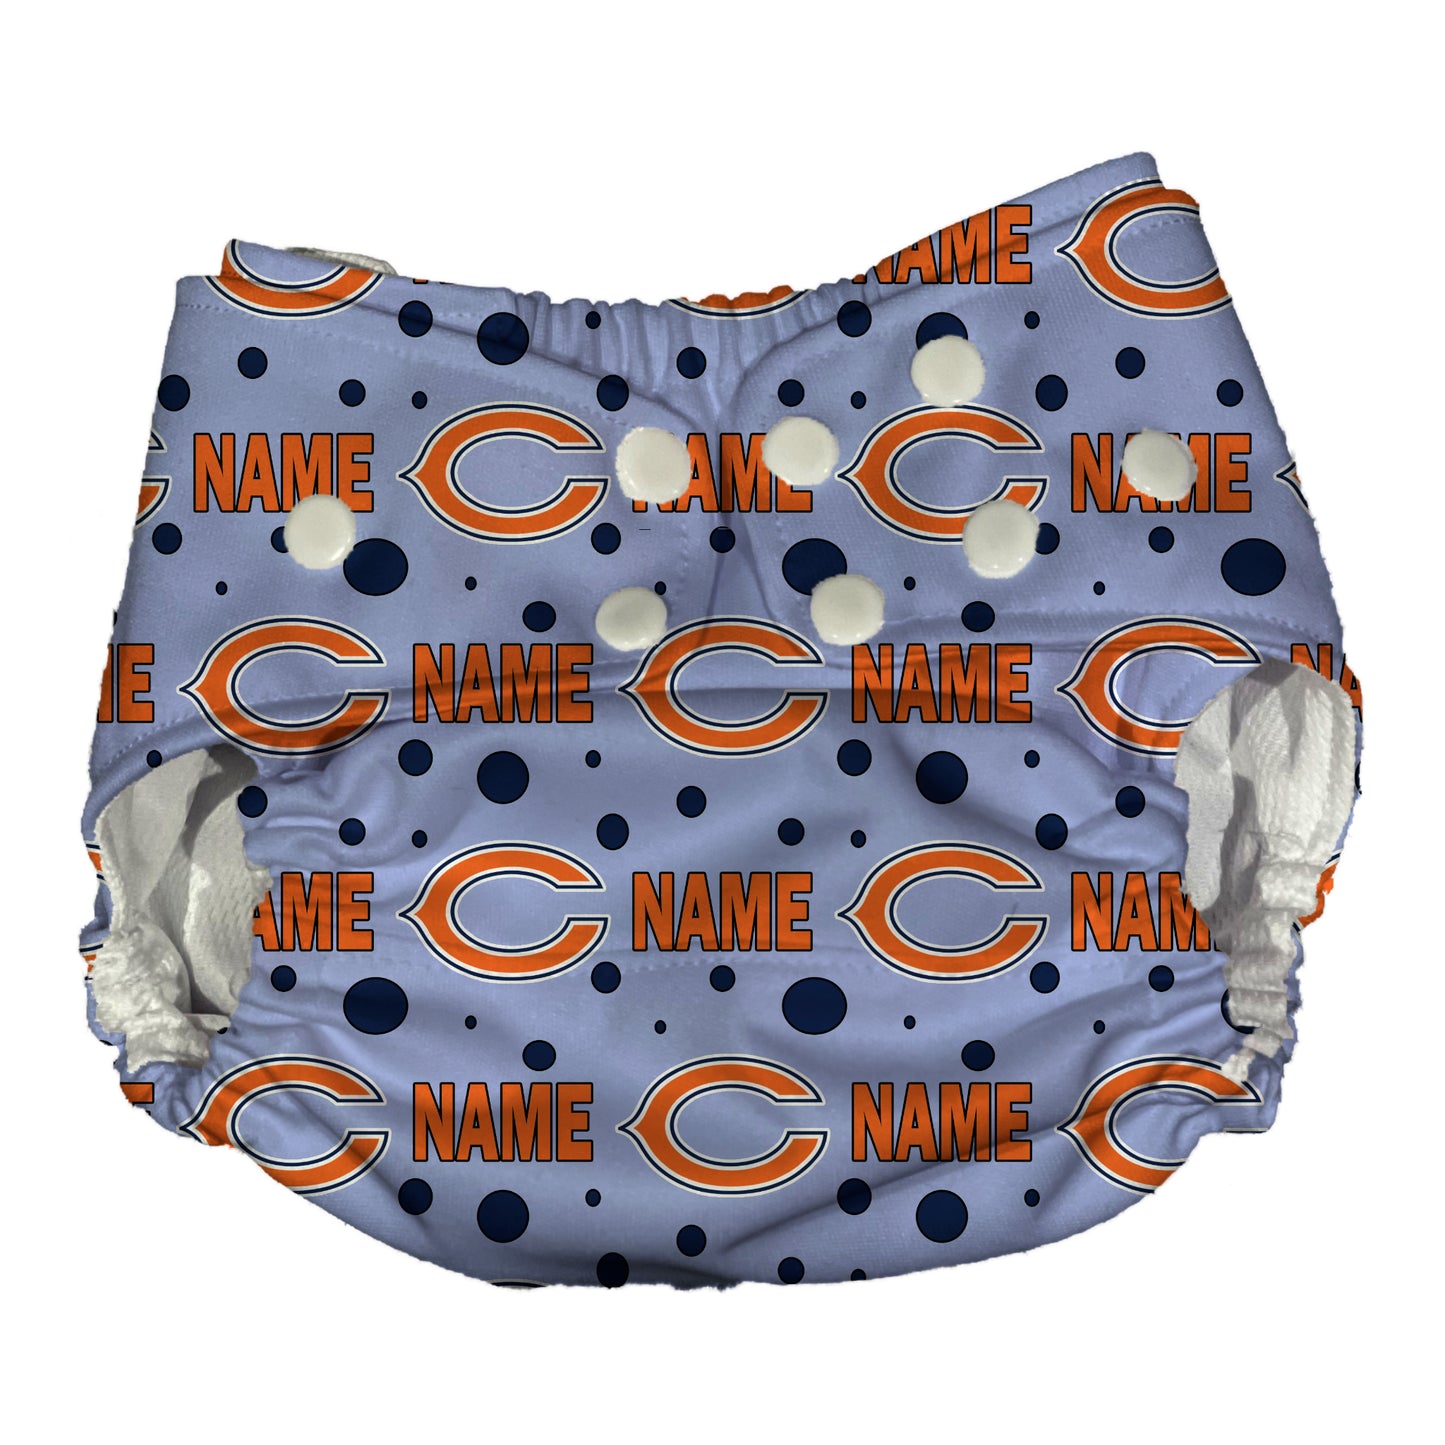 Chicago Bears Waterproof Diaper Cover | Reusable Swimmer